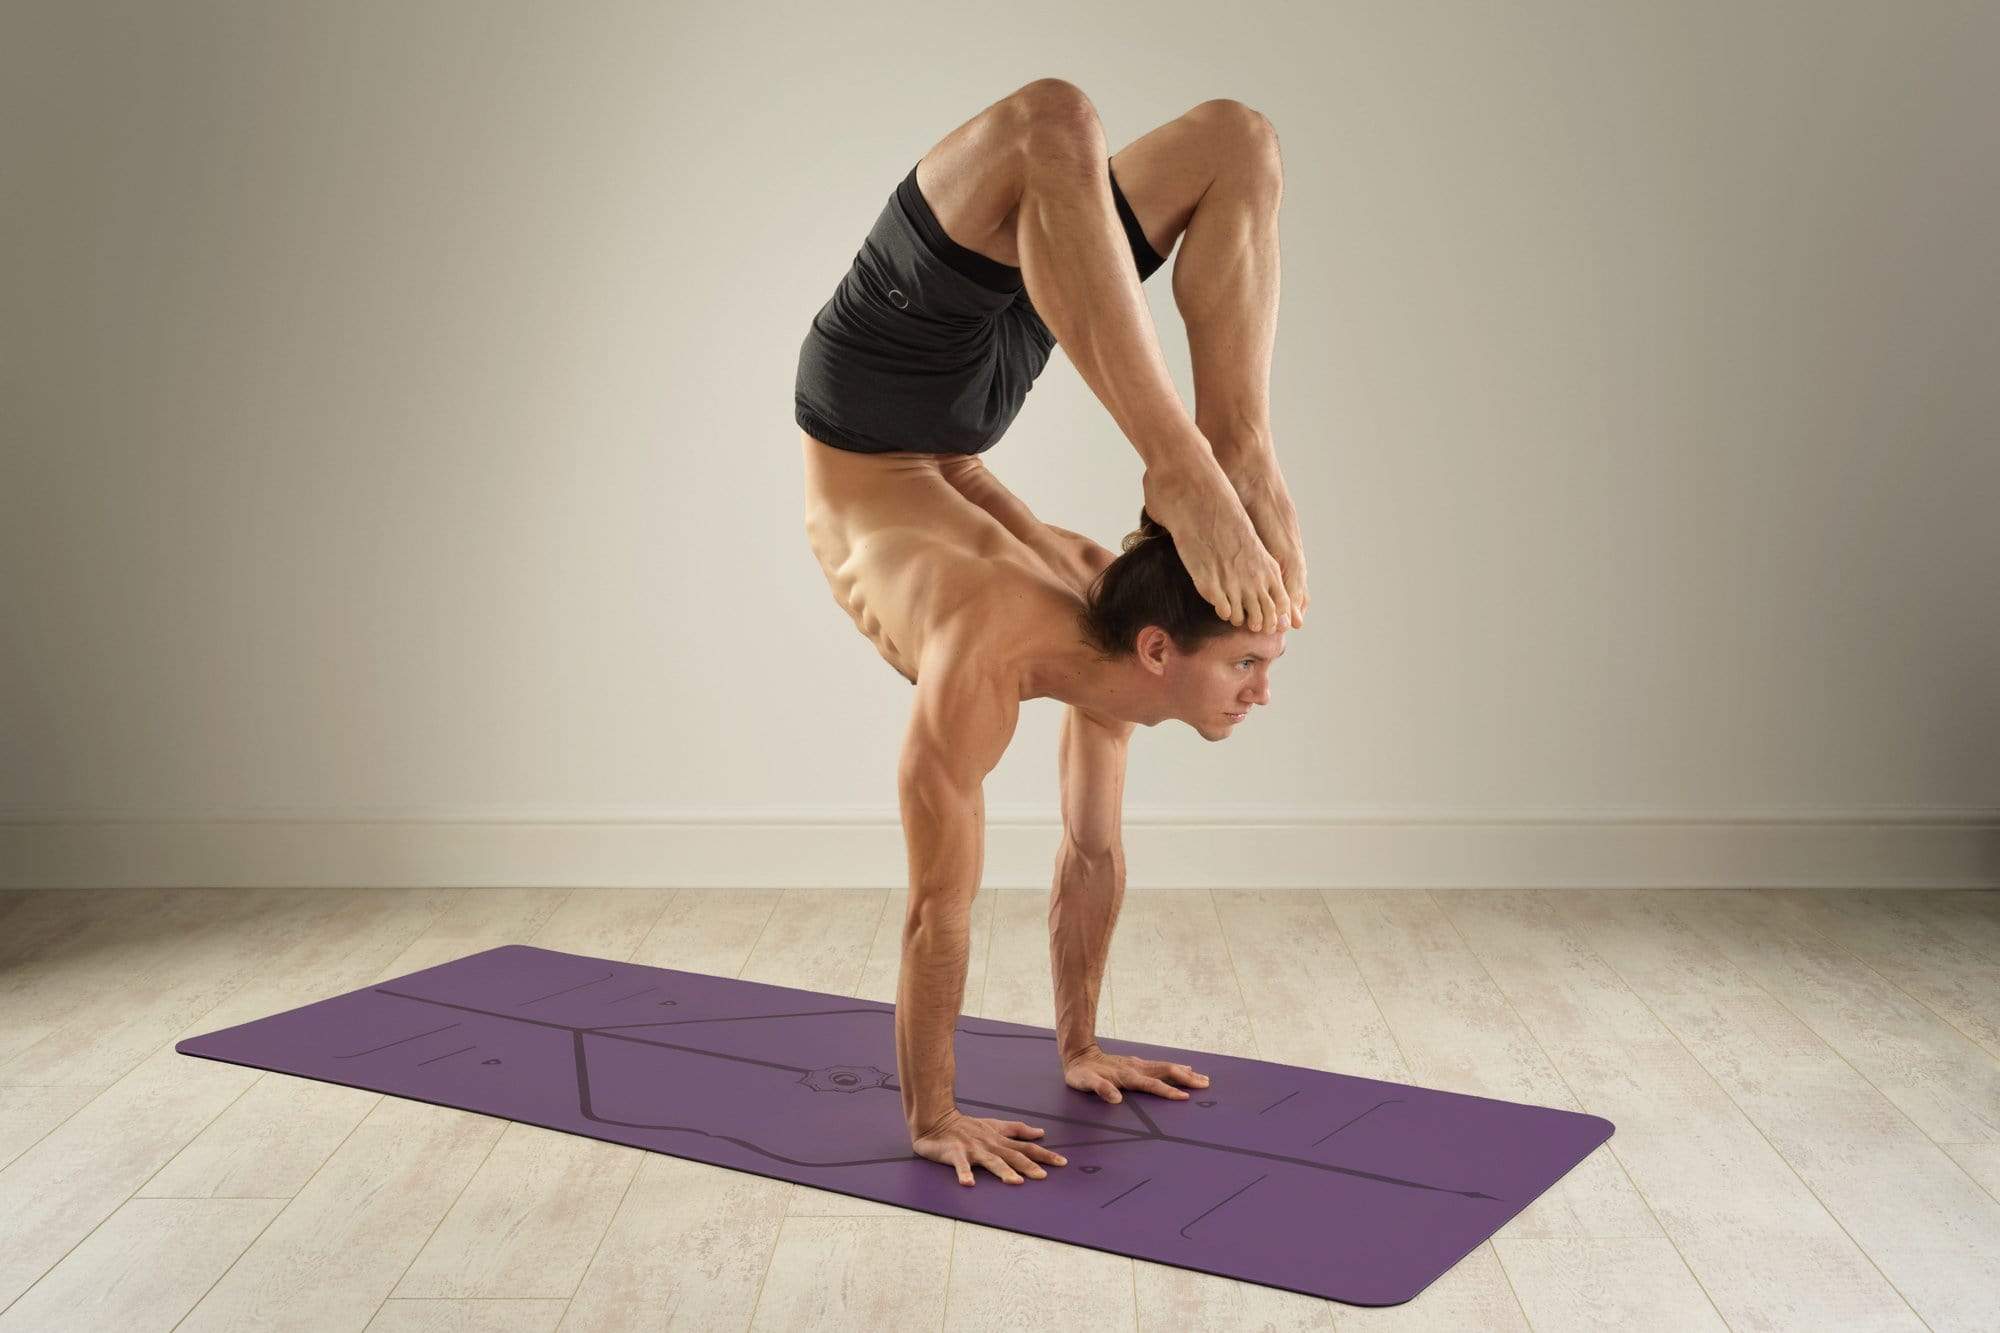 Yogi using Liforme Purple Earth Yoga Mat for extra grip